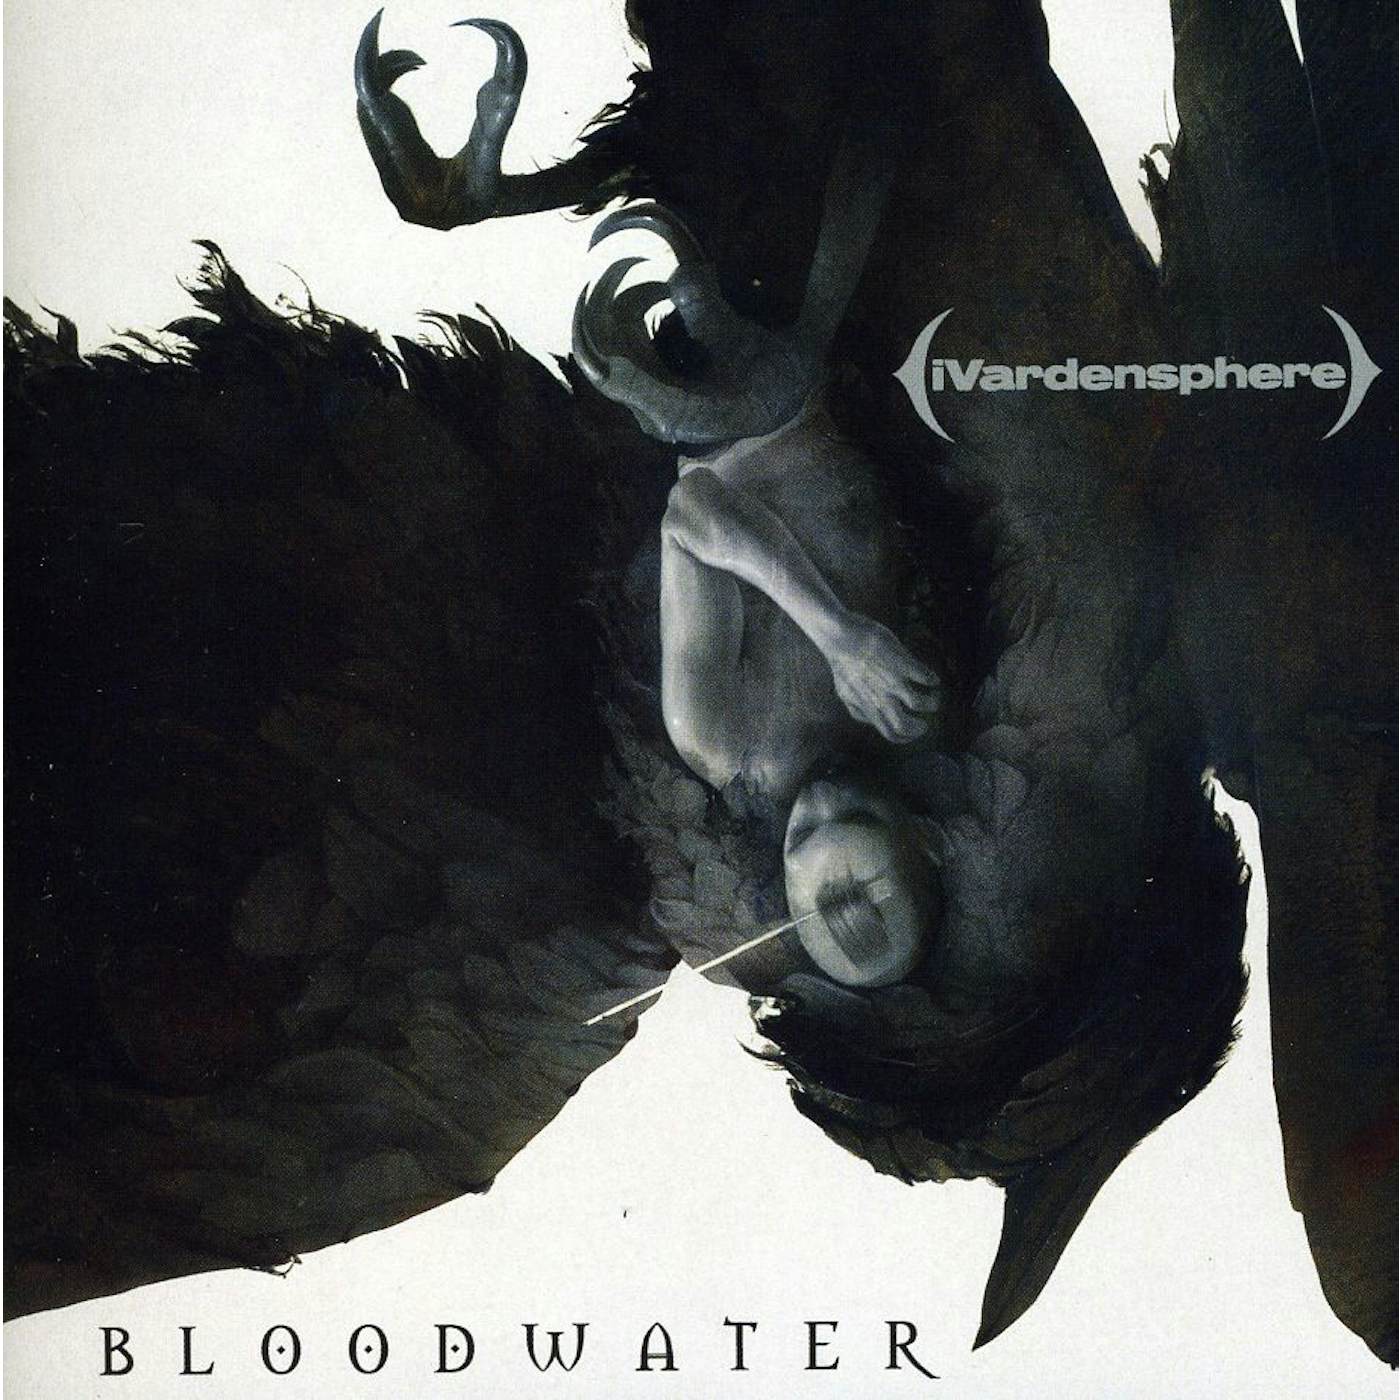 iVardensphere BLOODWATER CD